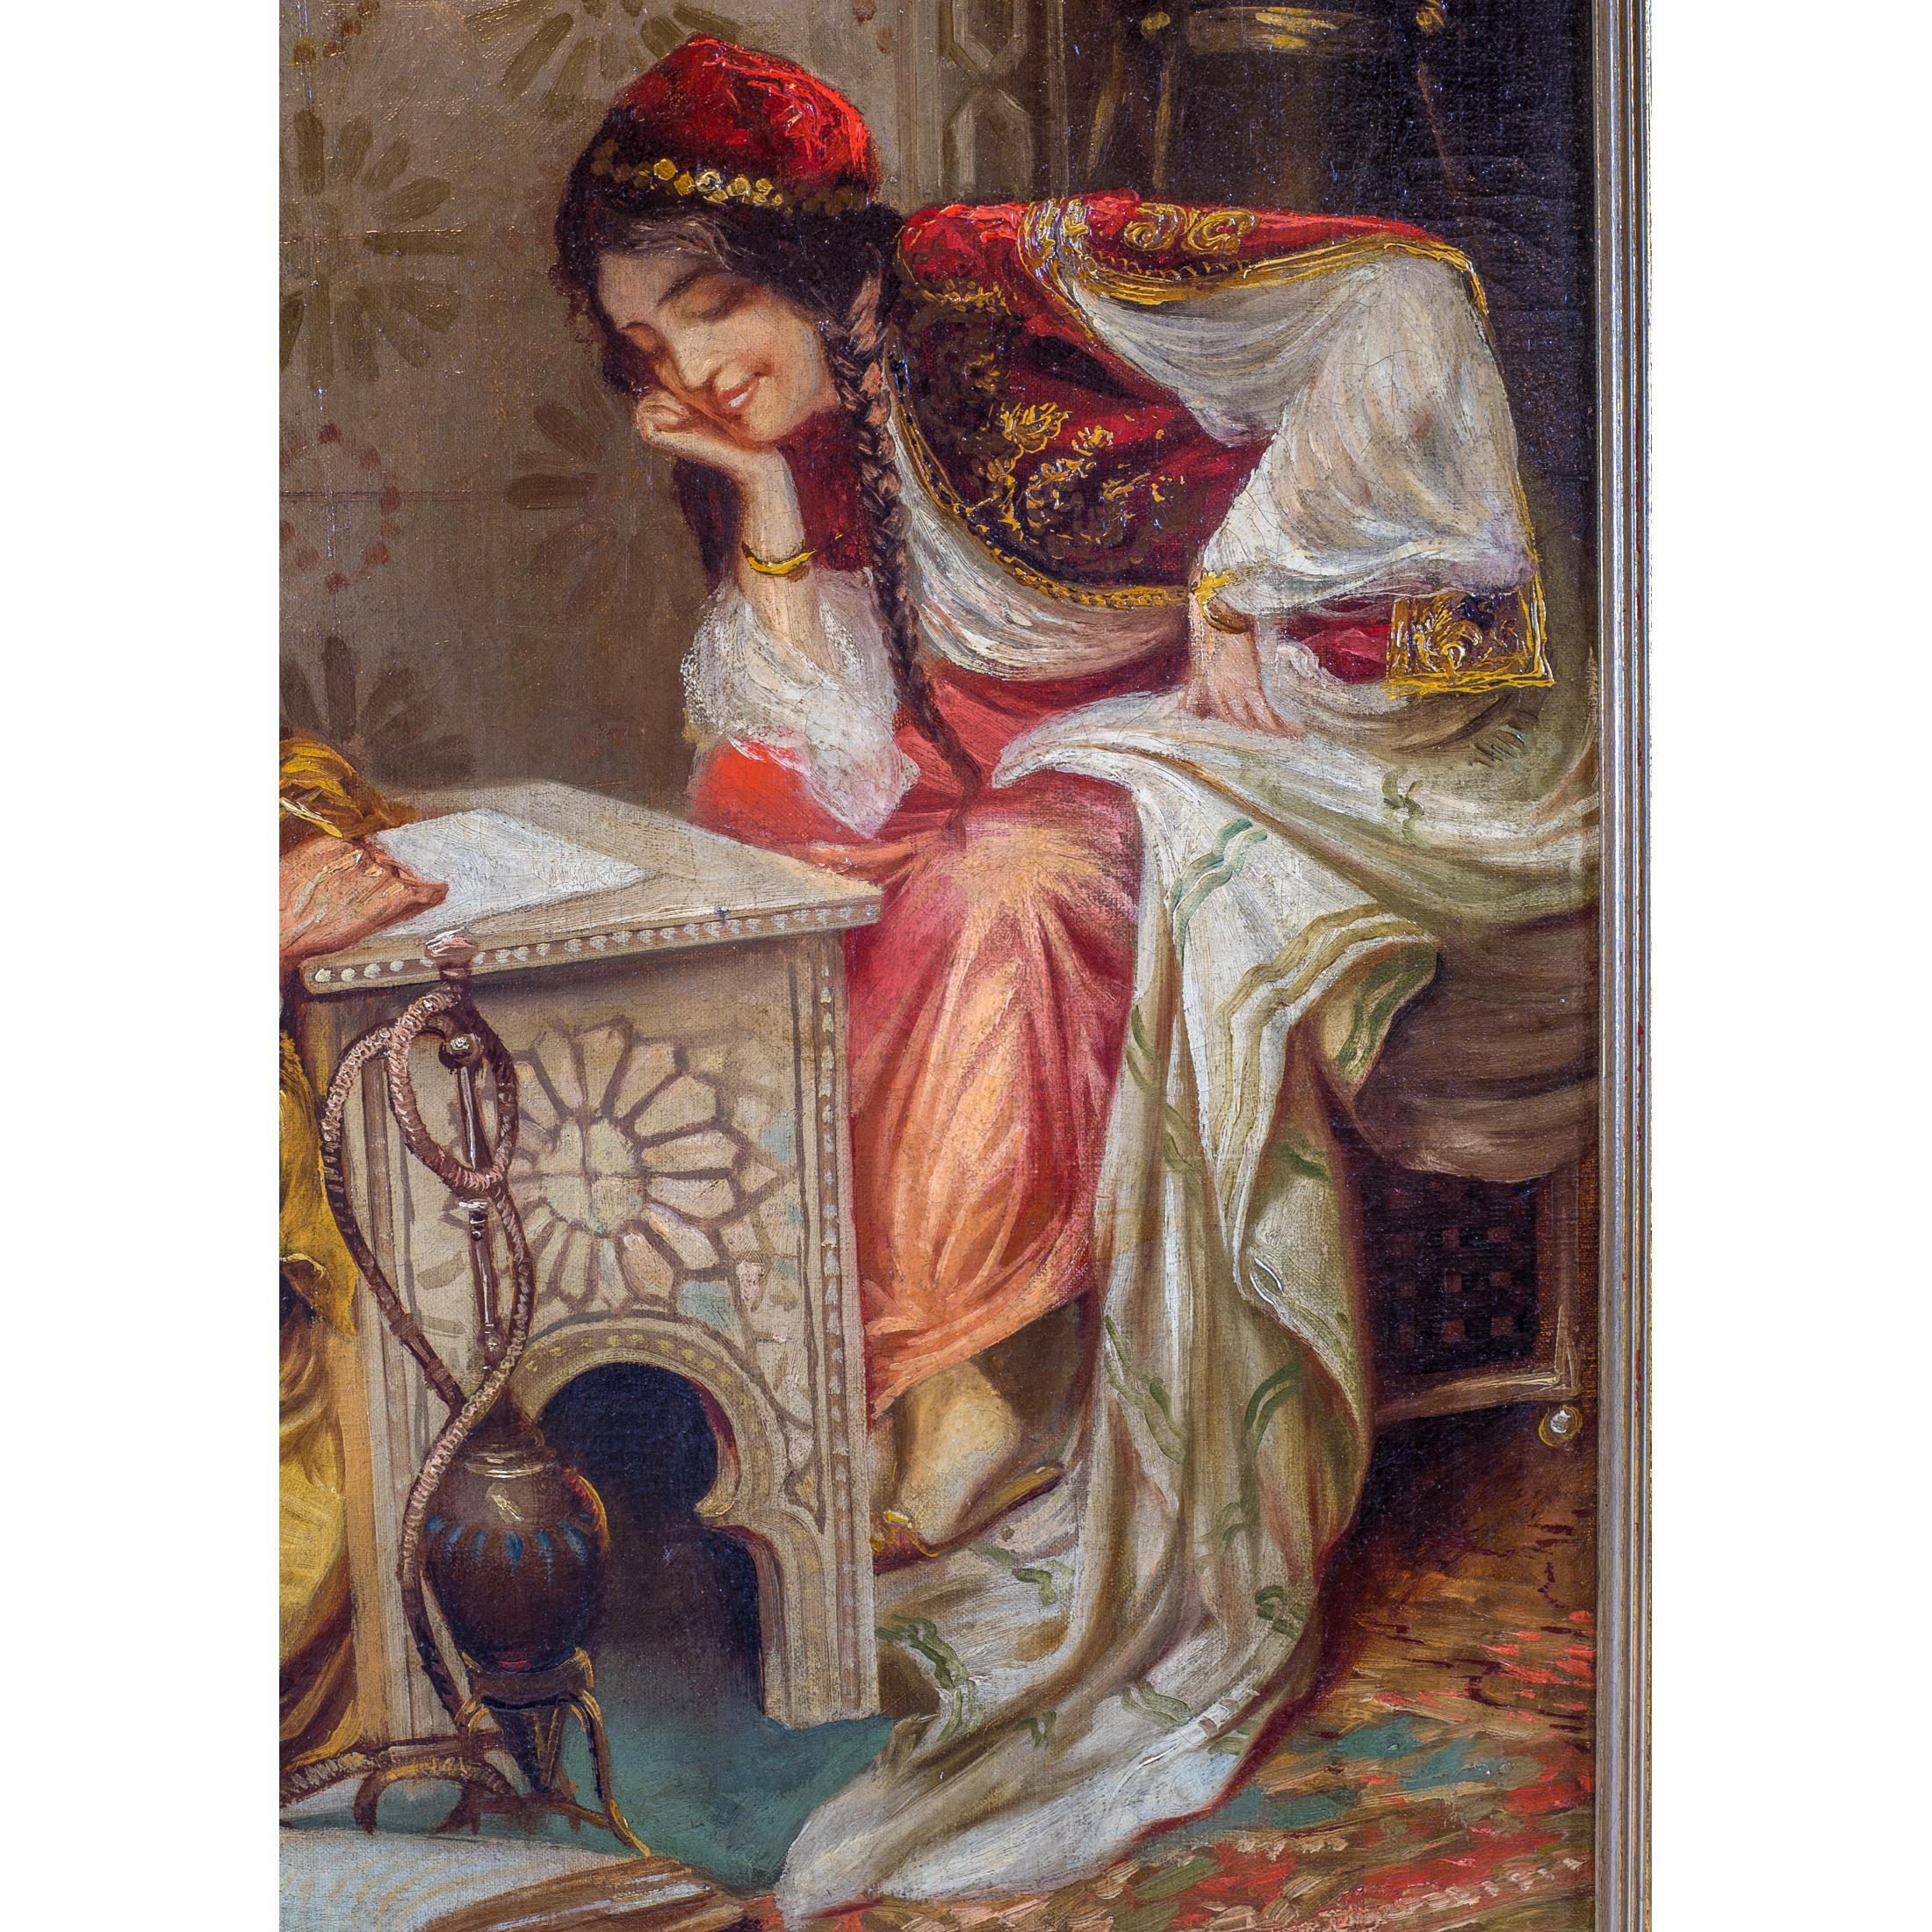 AMEDEO SIMONETTI
Italian, 1874-1922

Writing a Letter 

Signed ‘Amedeo Simonetti’  

Oil on canvas
30 x 20 inches